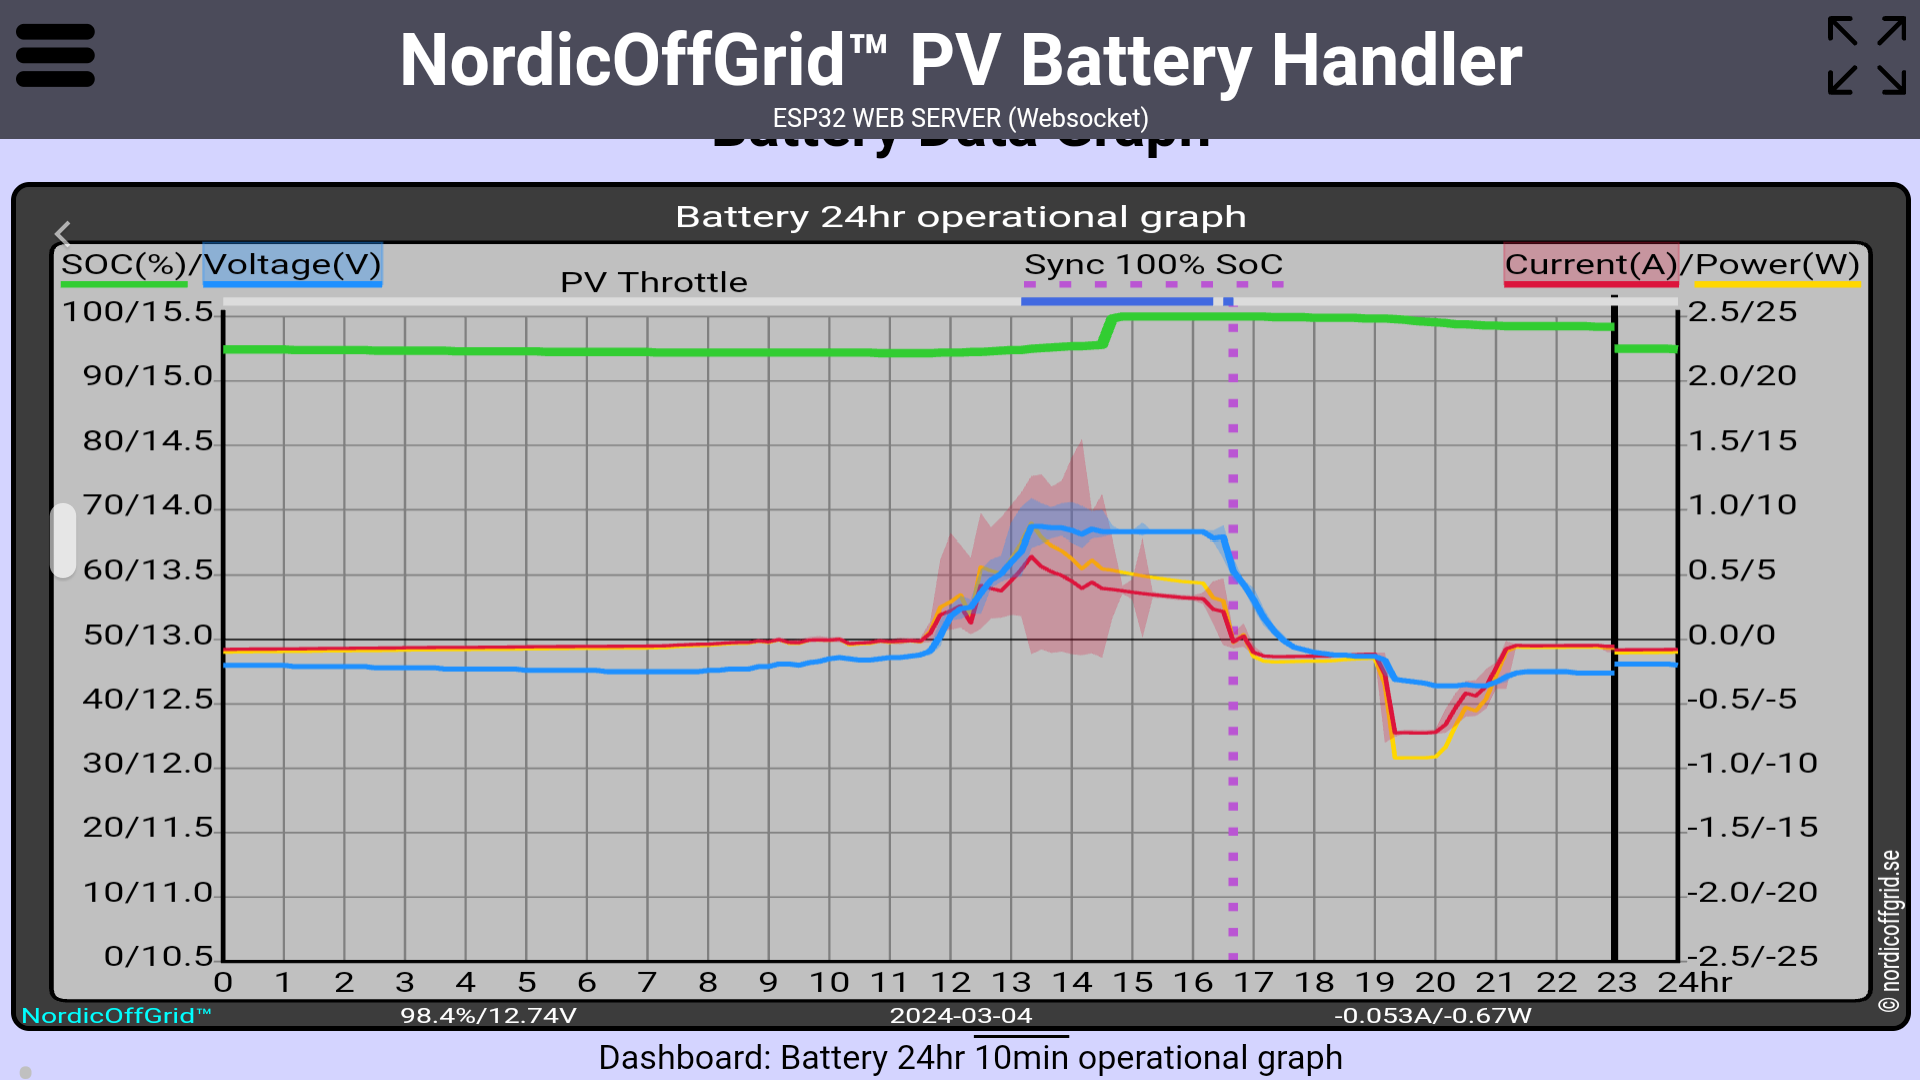 Battery 24hr operational graph